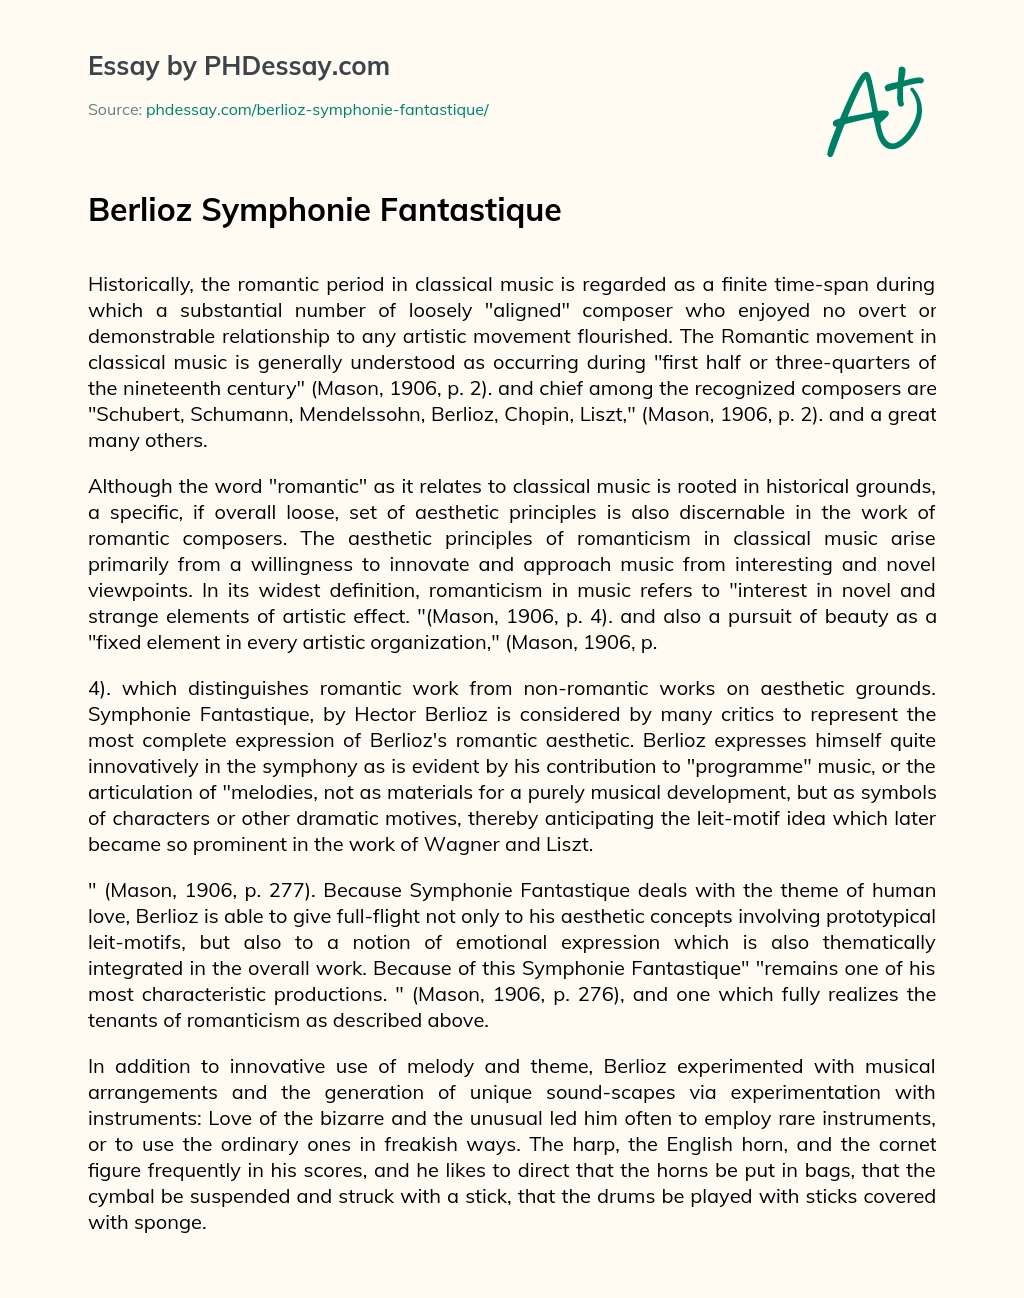 Berlioz Symphonie Fantastique essay